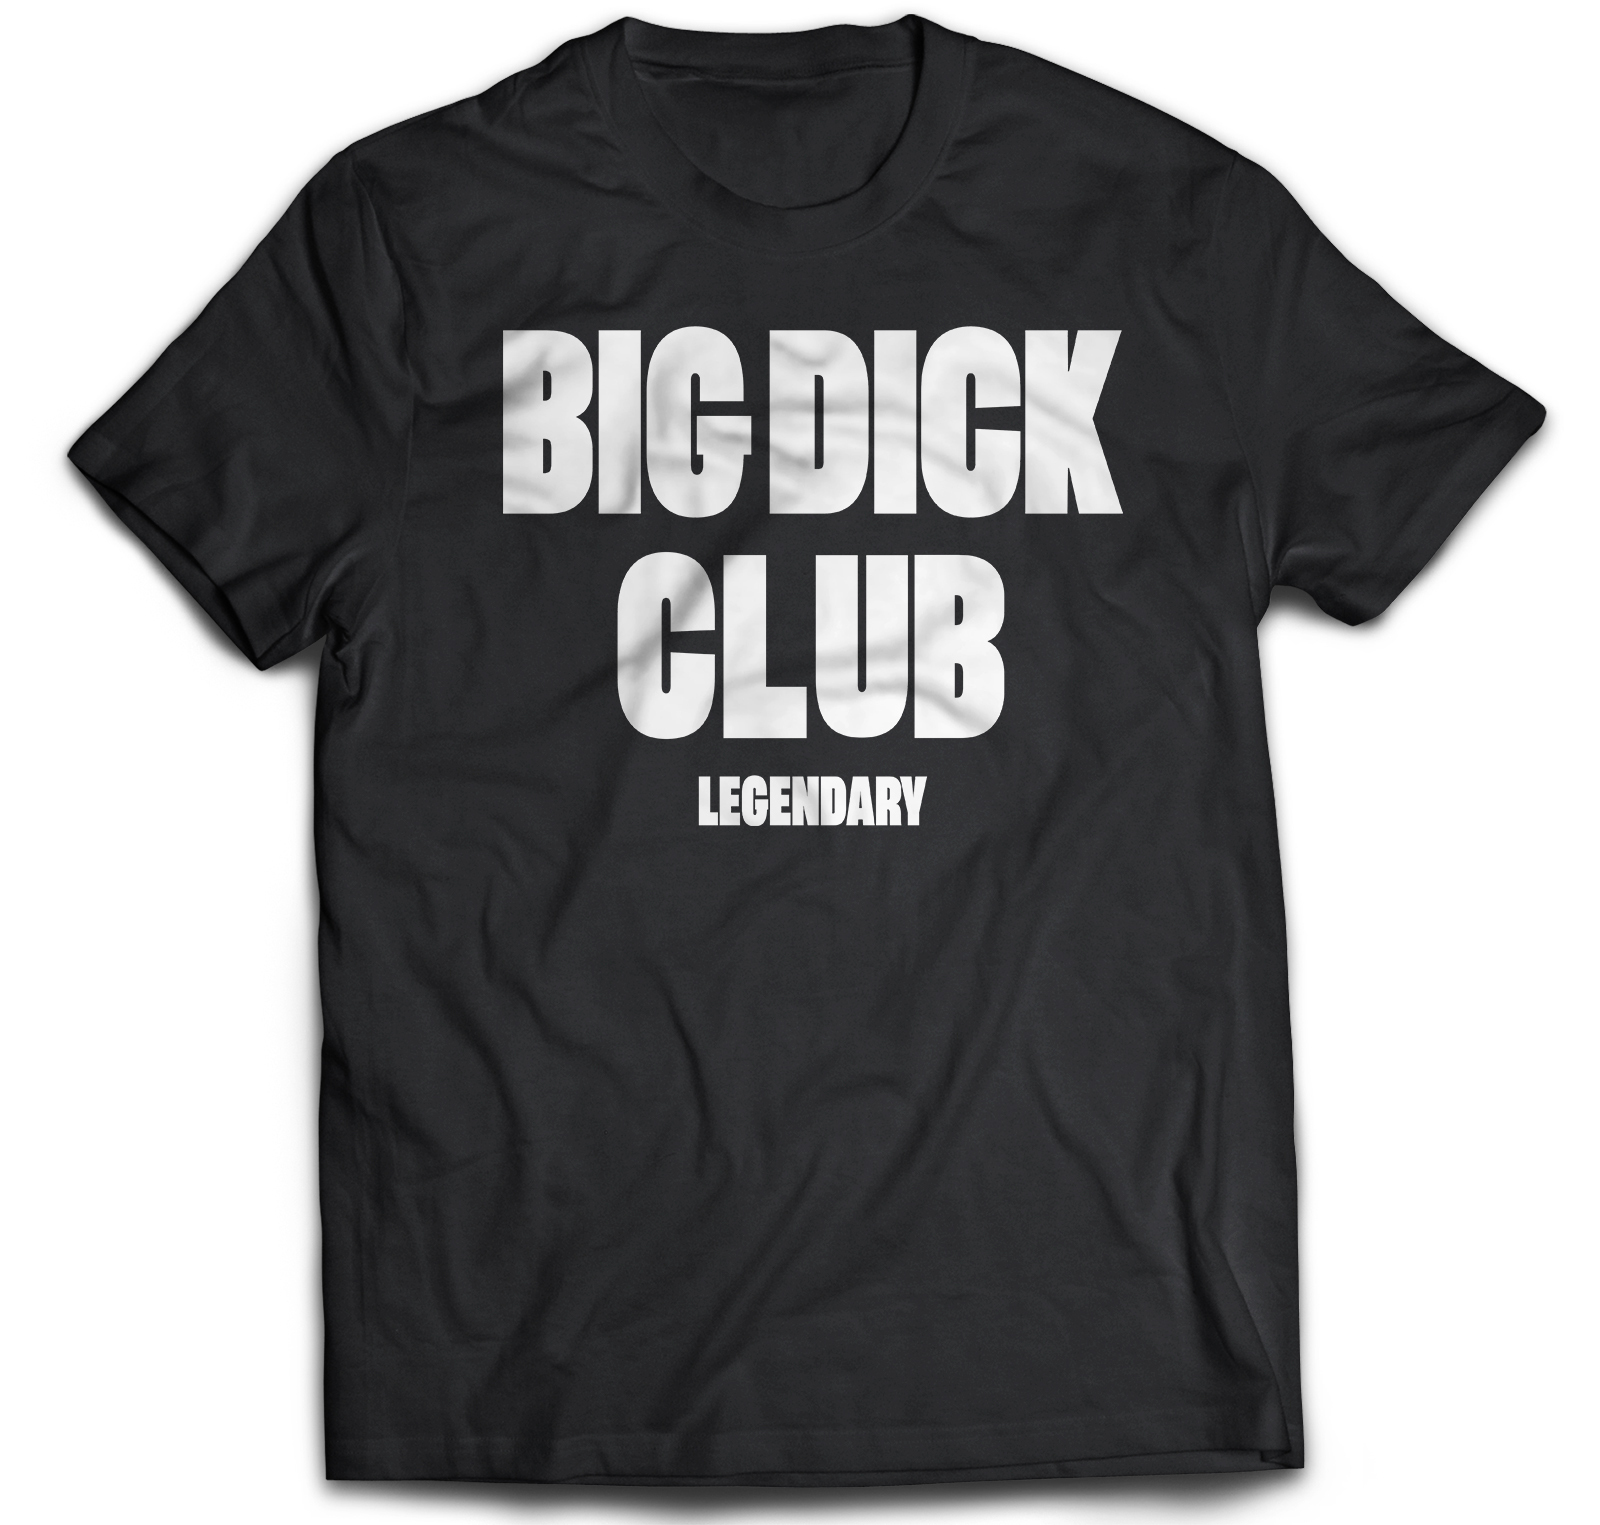 Cocks club. Футболка big dick Club. Биг Диг клаб. Трусы Биг Диг клаб. Big dick Club женская футболка.